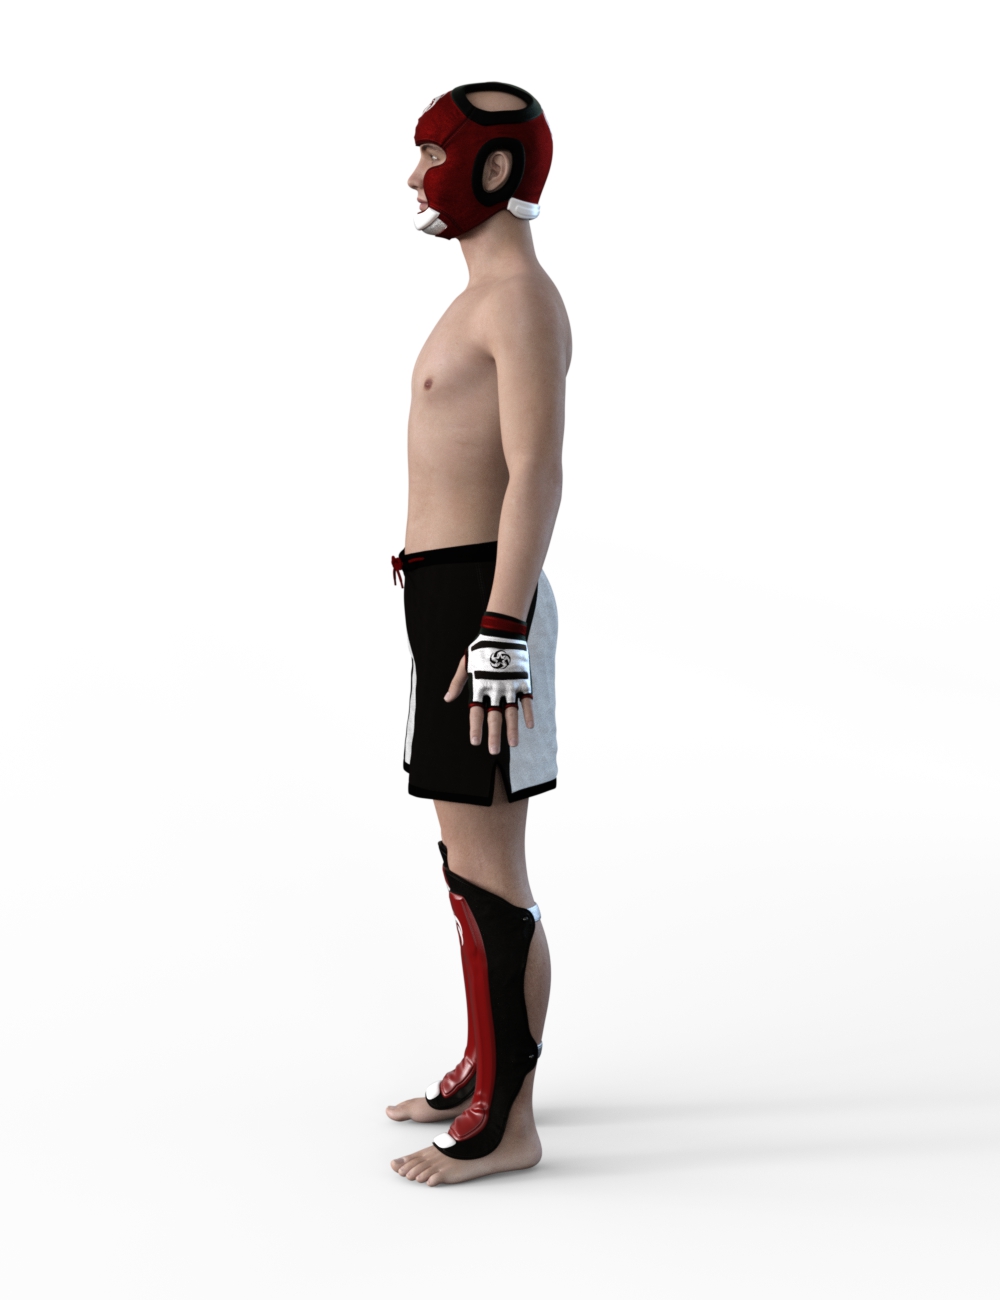 FBX- Base Male MMA Outfit by: Paleo, 3D Models by Daz 3D